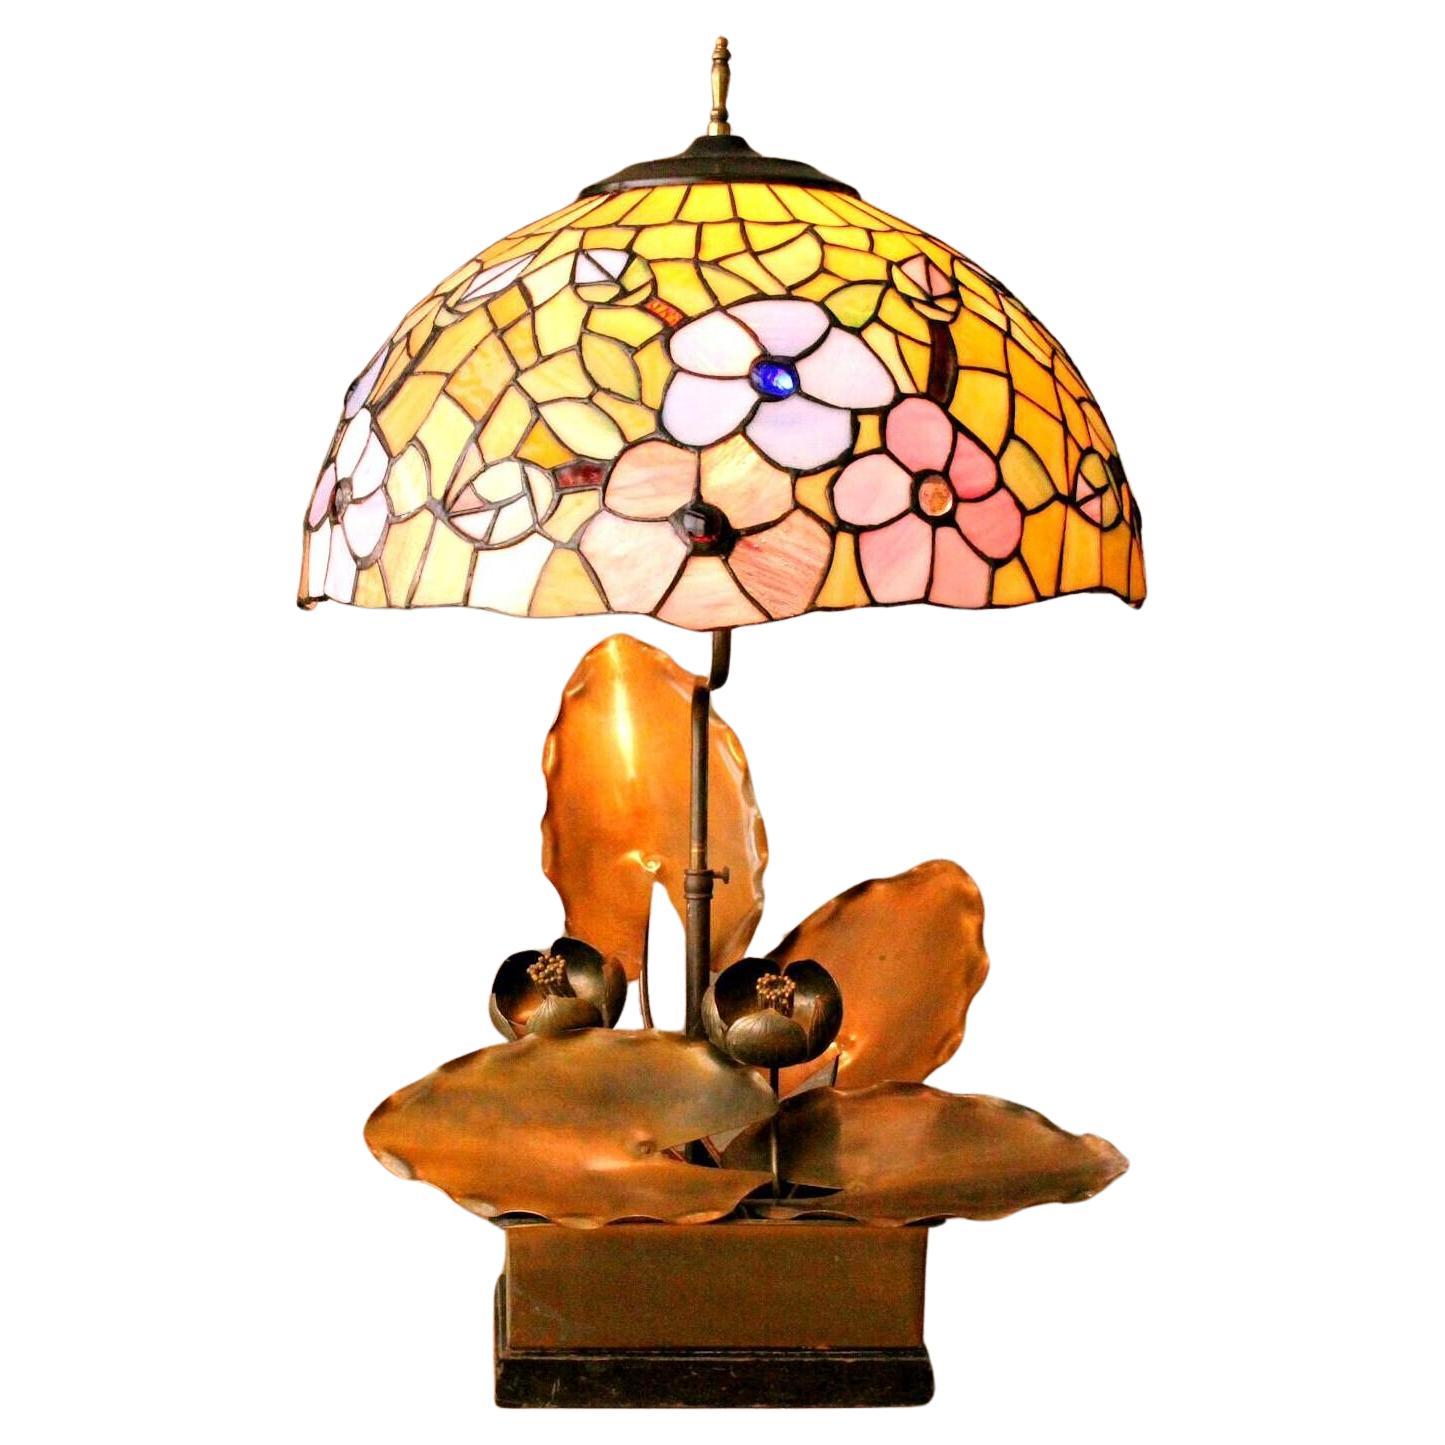 Magificent 1920s Art Nouveau Sculptural Lotus Lampe aus Metall. Kamed Kunstglas im Angebot